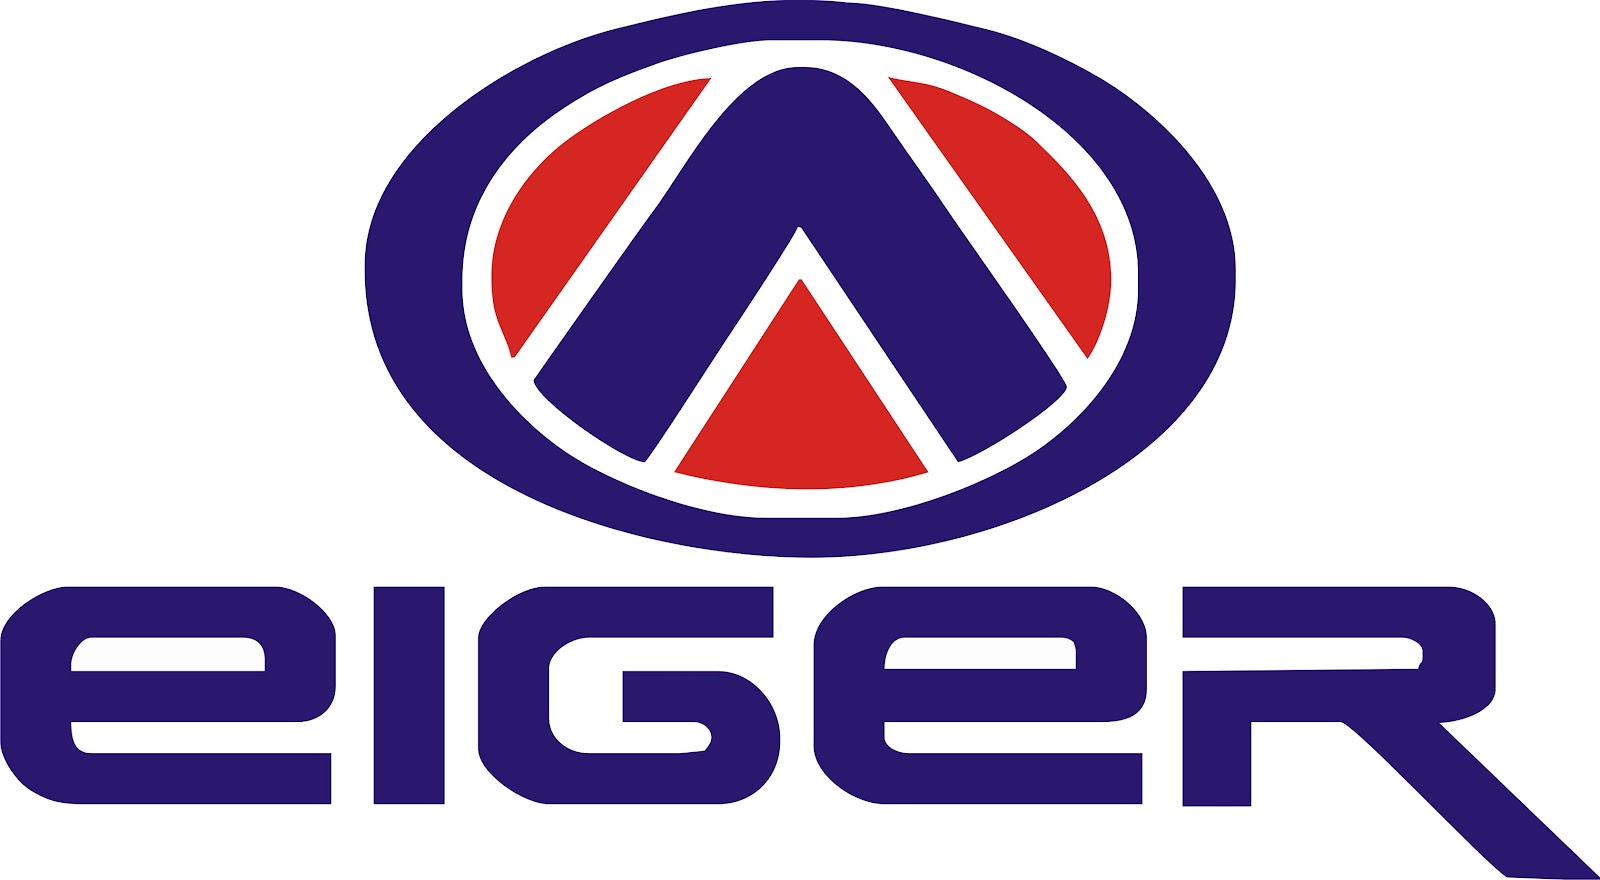  Logo Eiger Nulight Creation